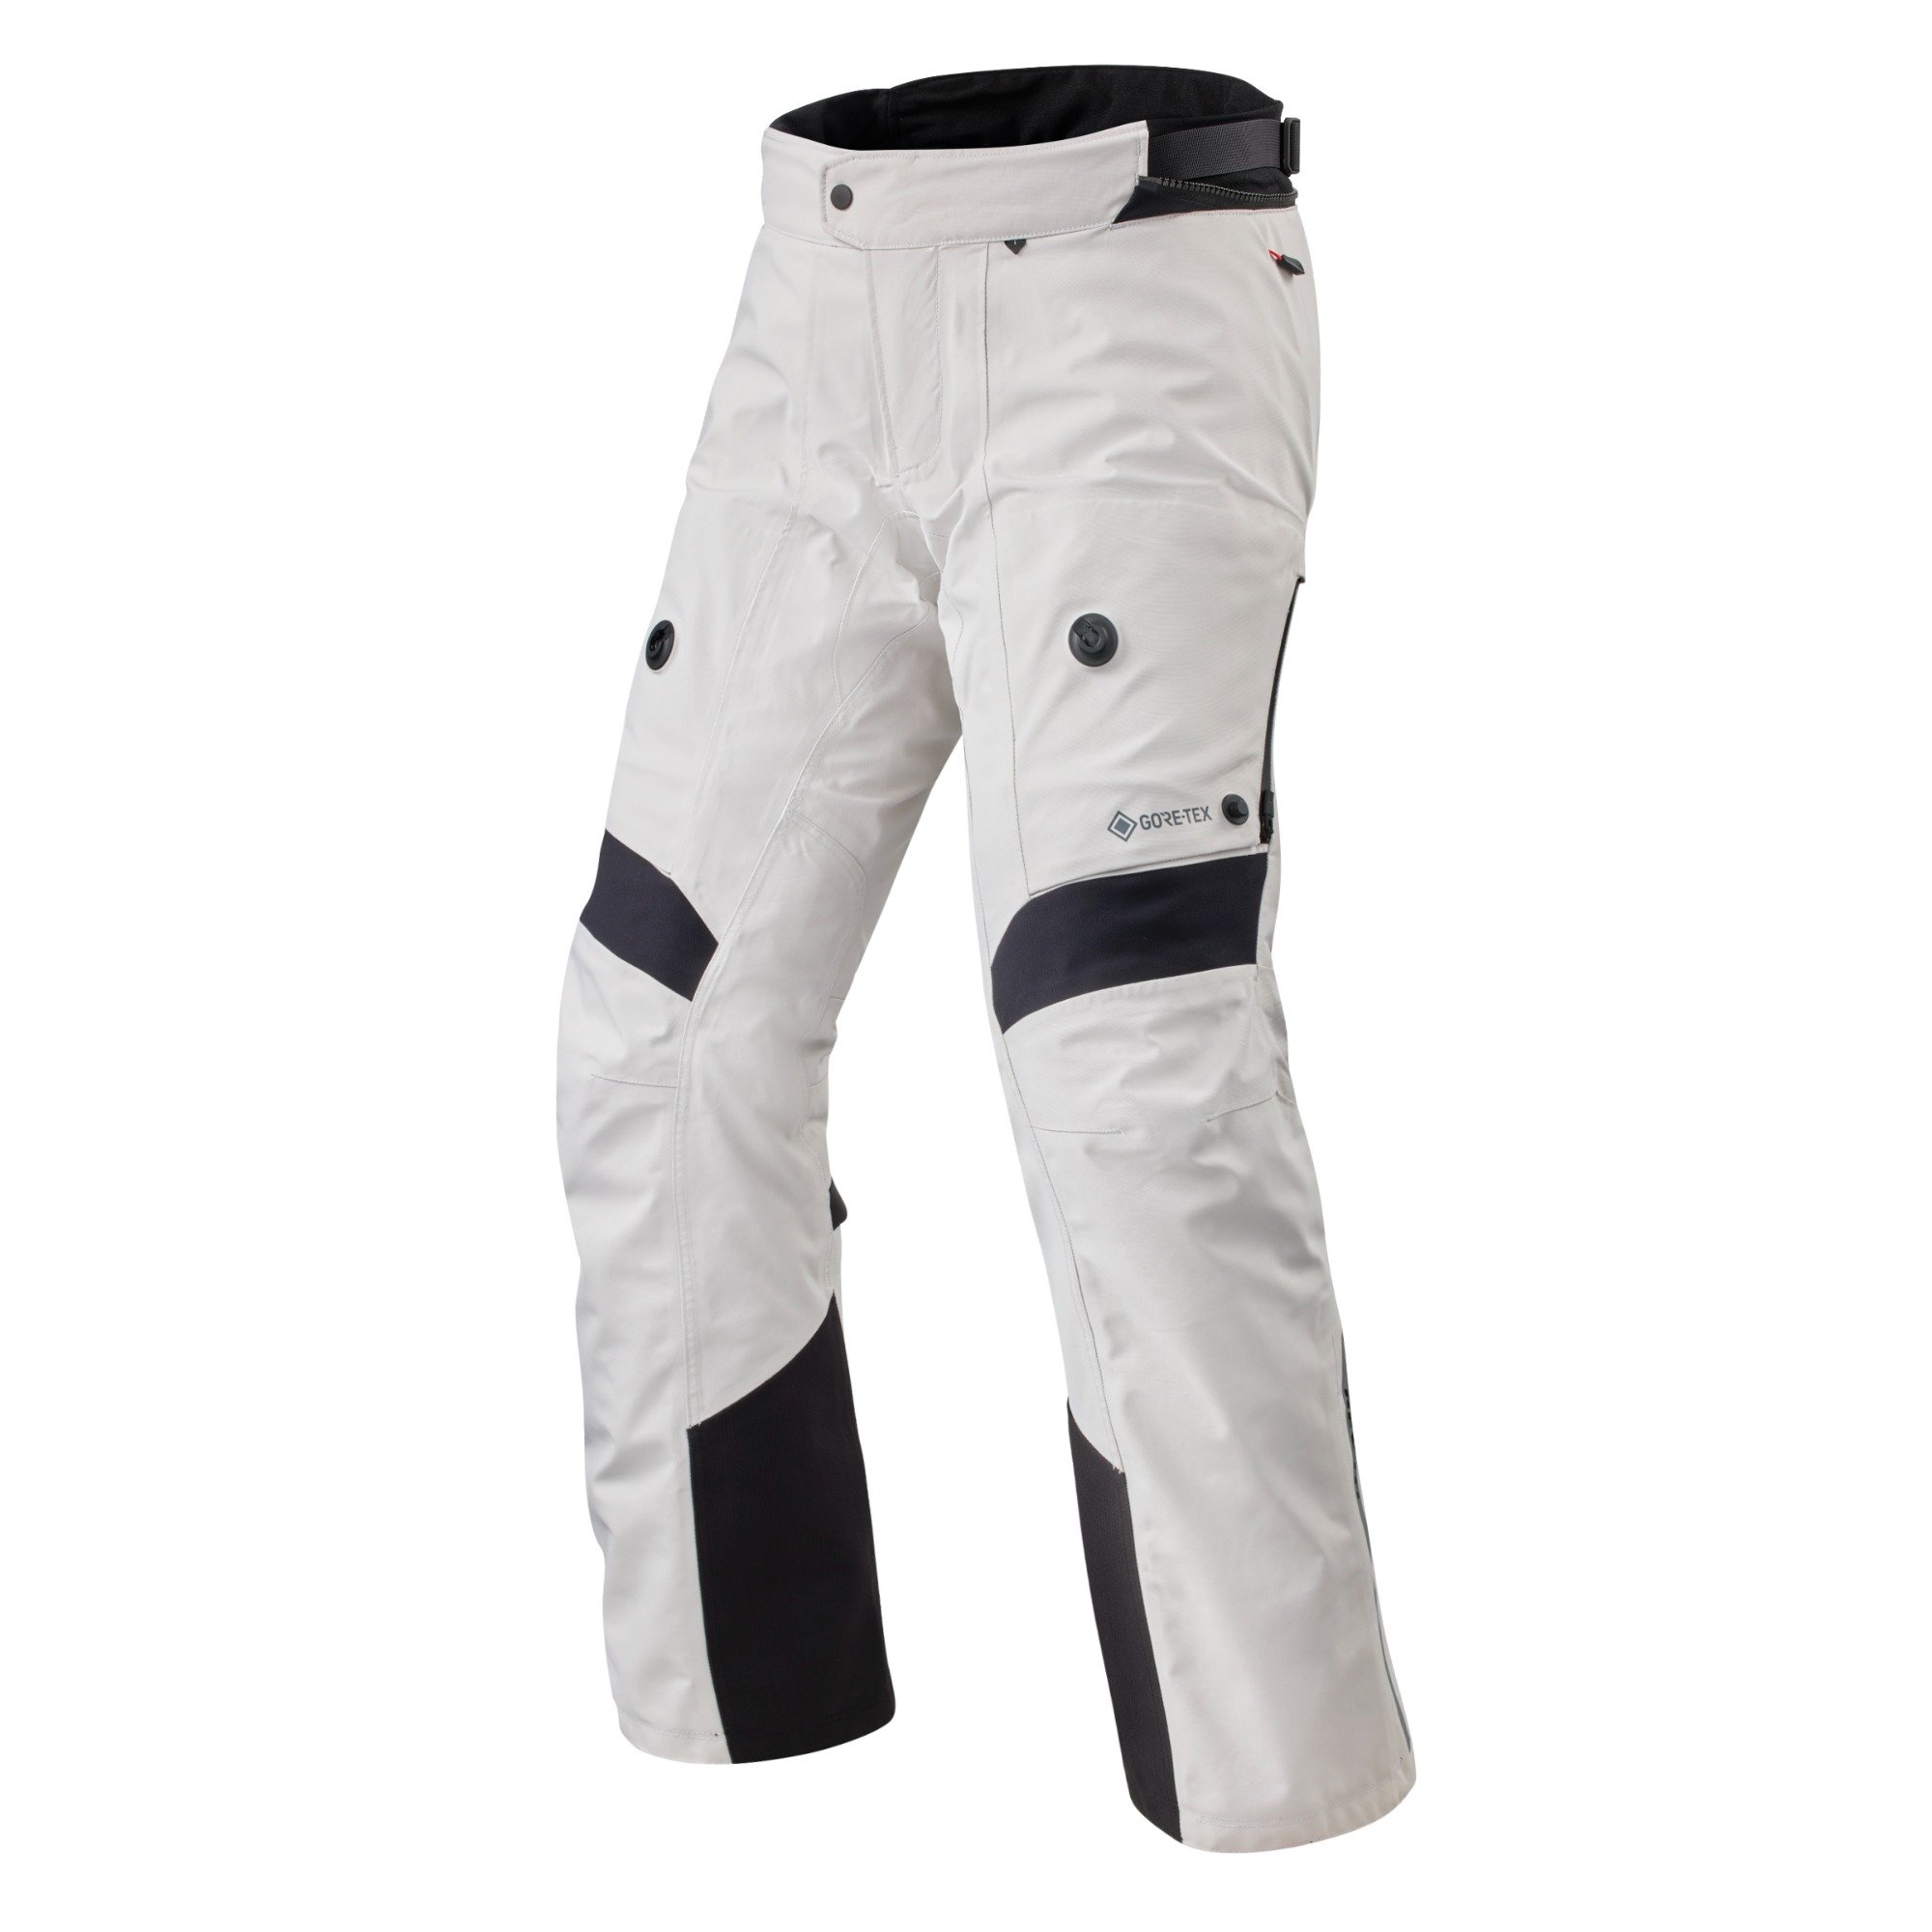 Image of REV'IT! Pants Poseidon 3 GTX Silver Black Standard Motorcycle Pants Size 3XL ID 8700001362634